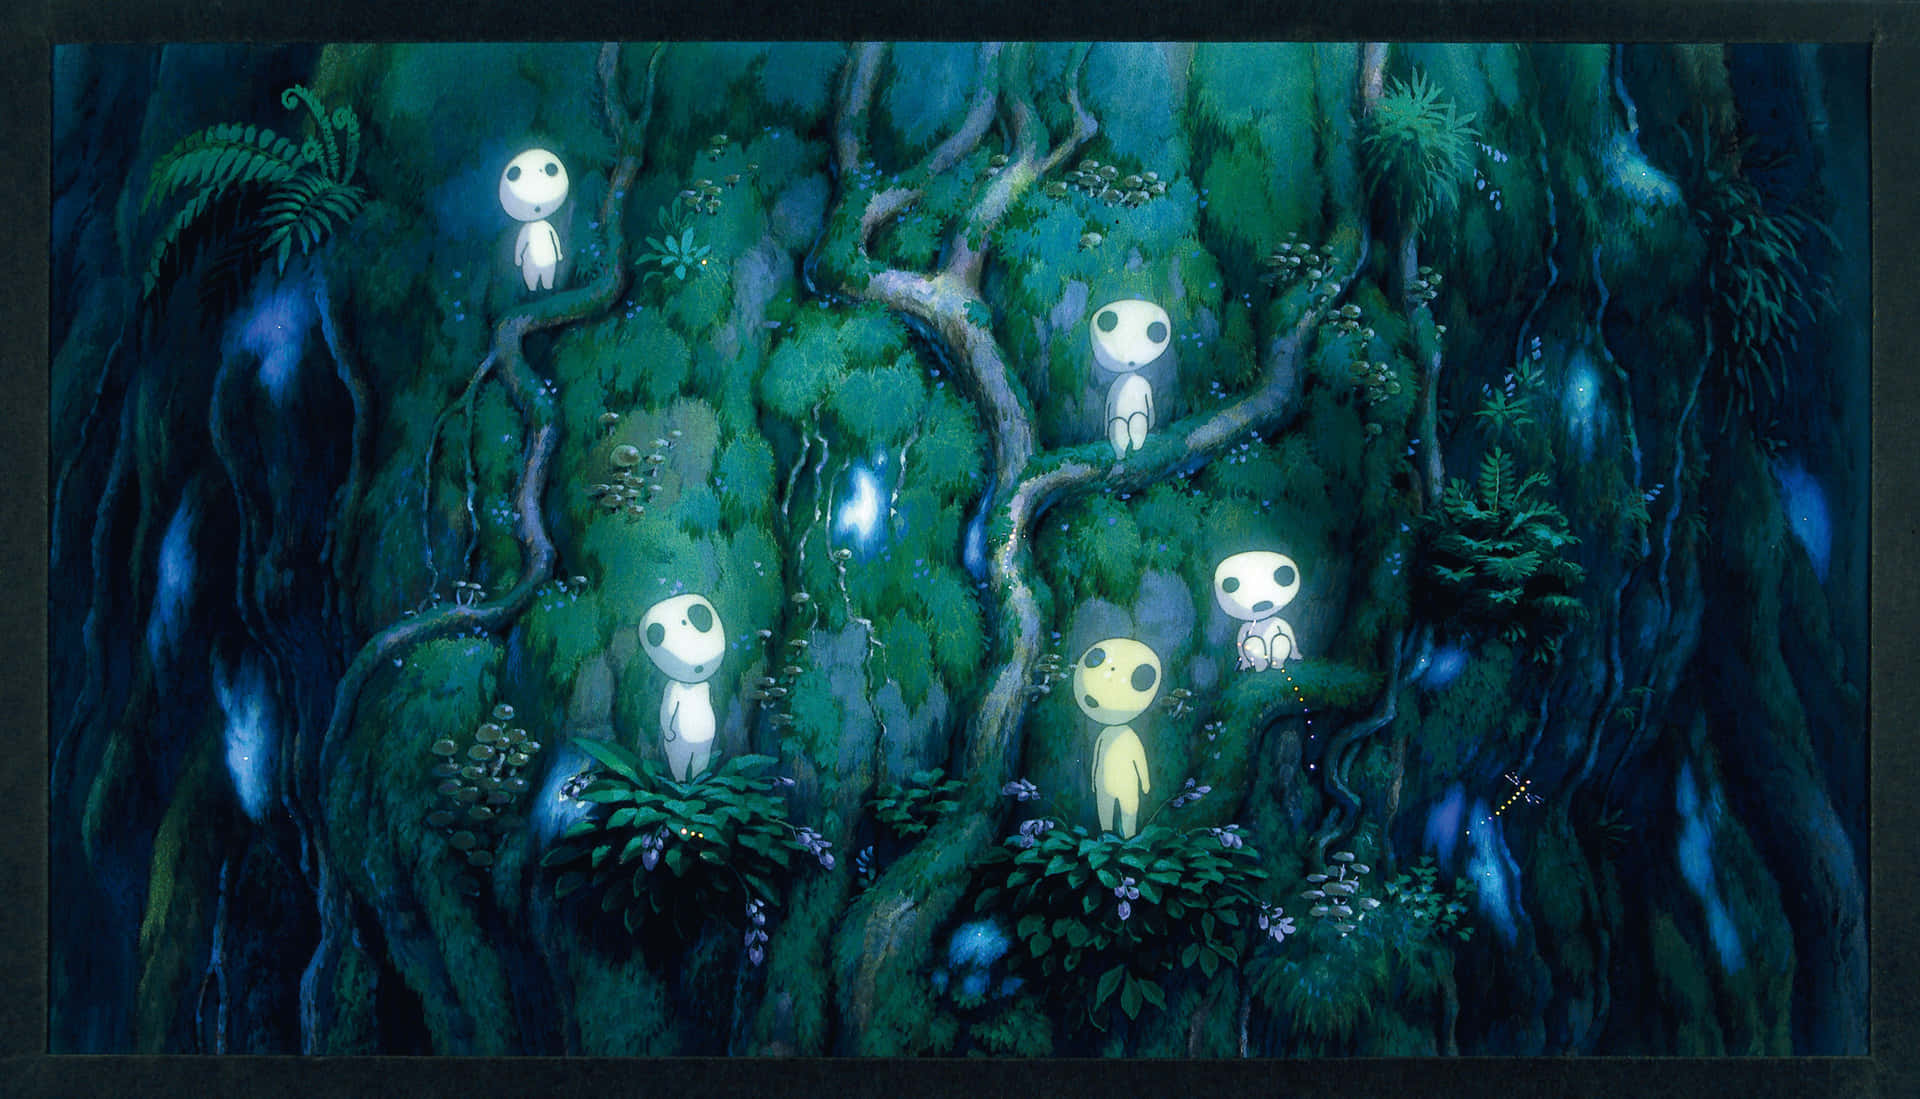 Enchanting Landscape from Studio Ghibli Art Wallpaper